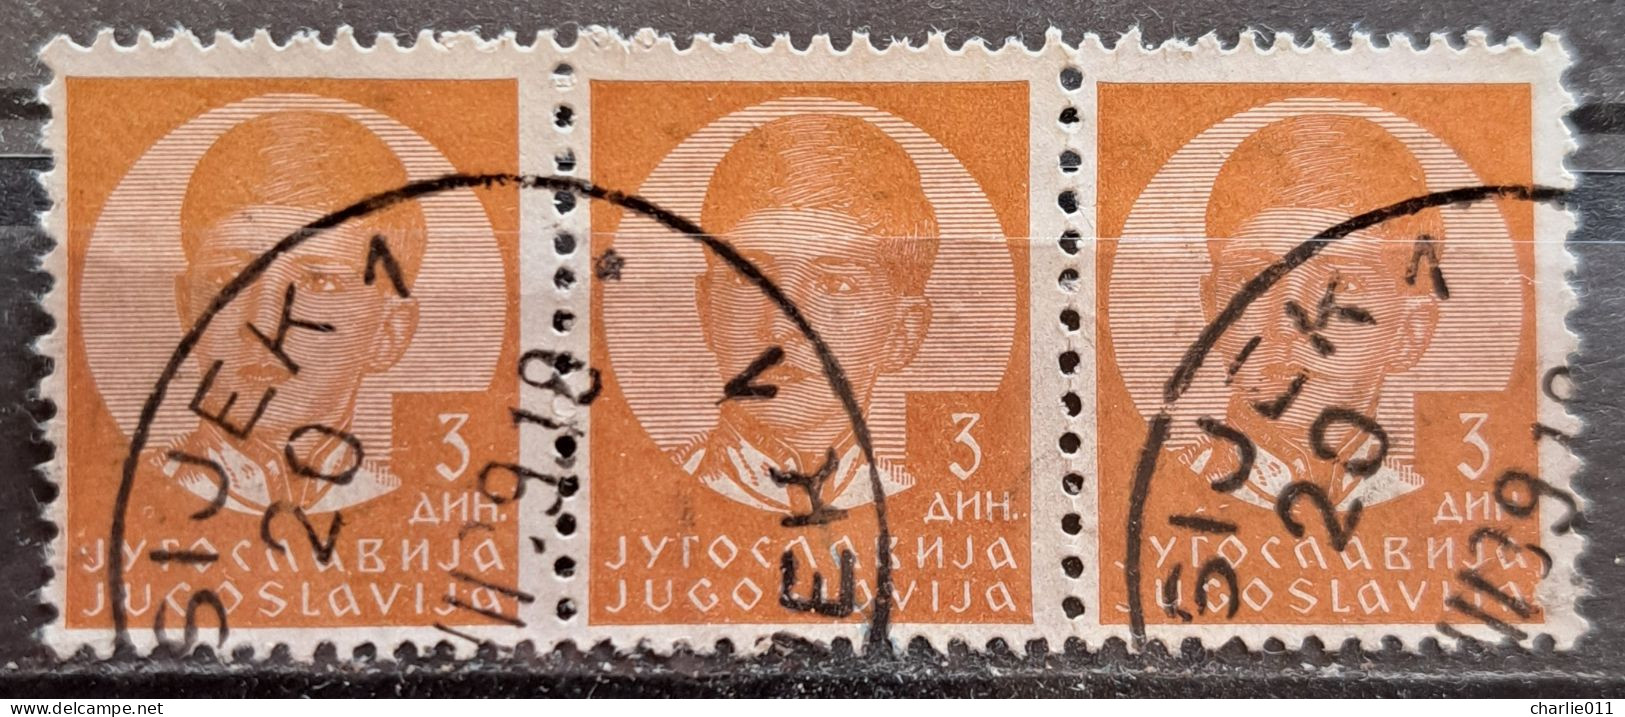 KING PETER II-3 DIN.-3 IN RAW-POSTMARK OSIJEK-ERROR-CROATIA-YUGOSLAVIA-1939 - Gebraucht